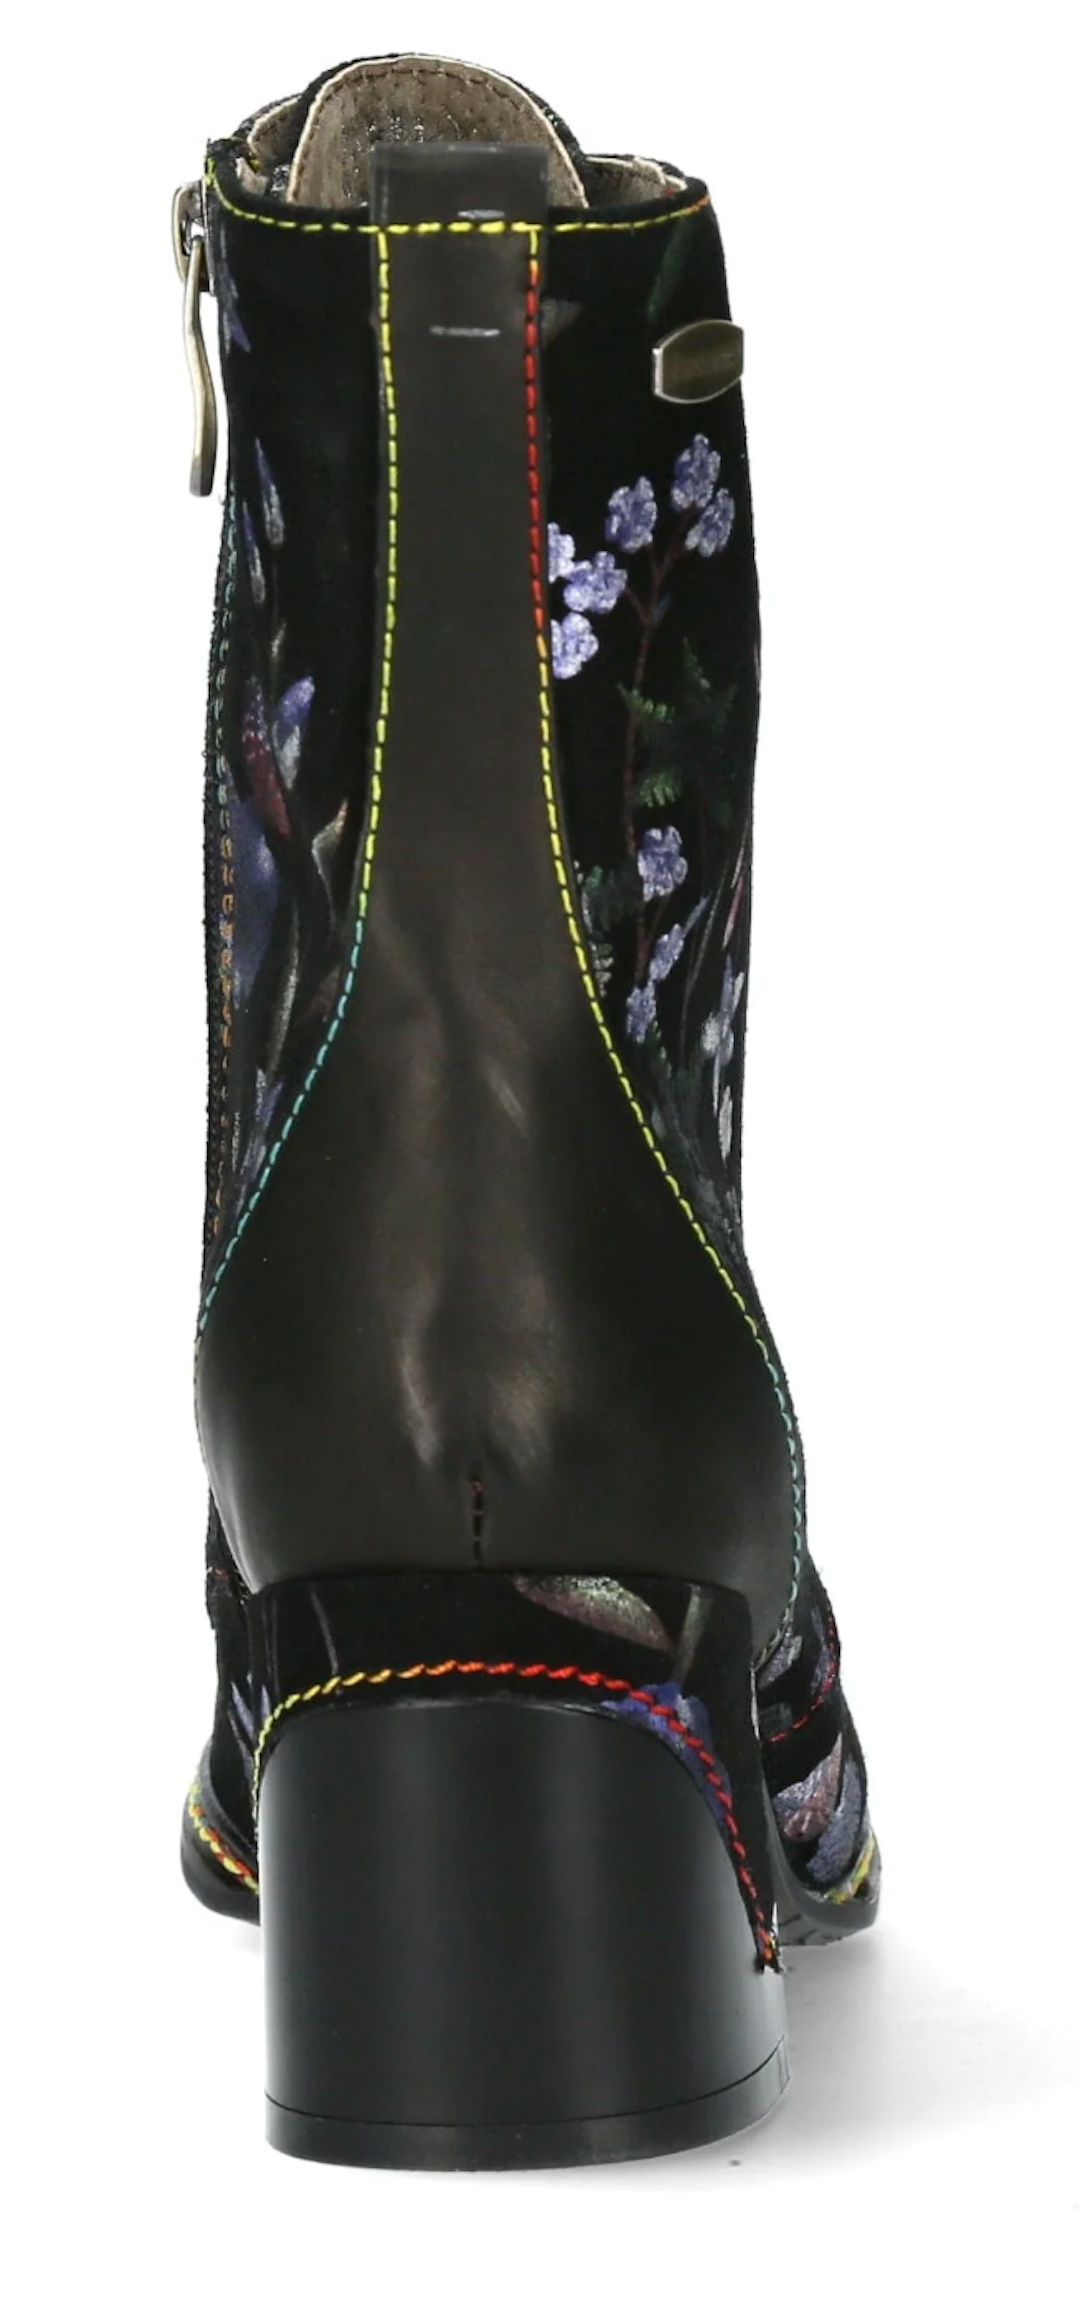 Laura Vita Komalo 24 Ladies Blue Leather & Textile Zip & Lace Ankle Boots